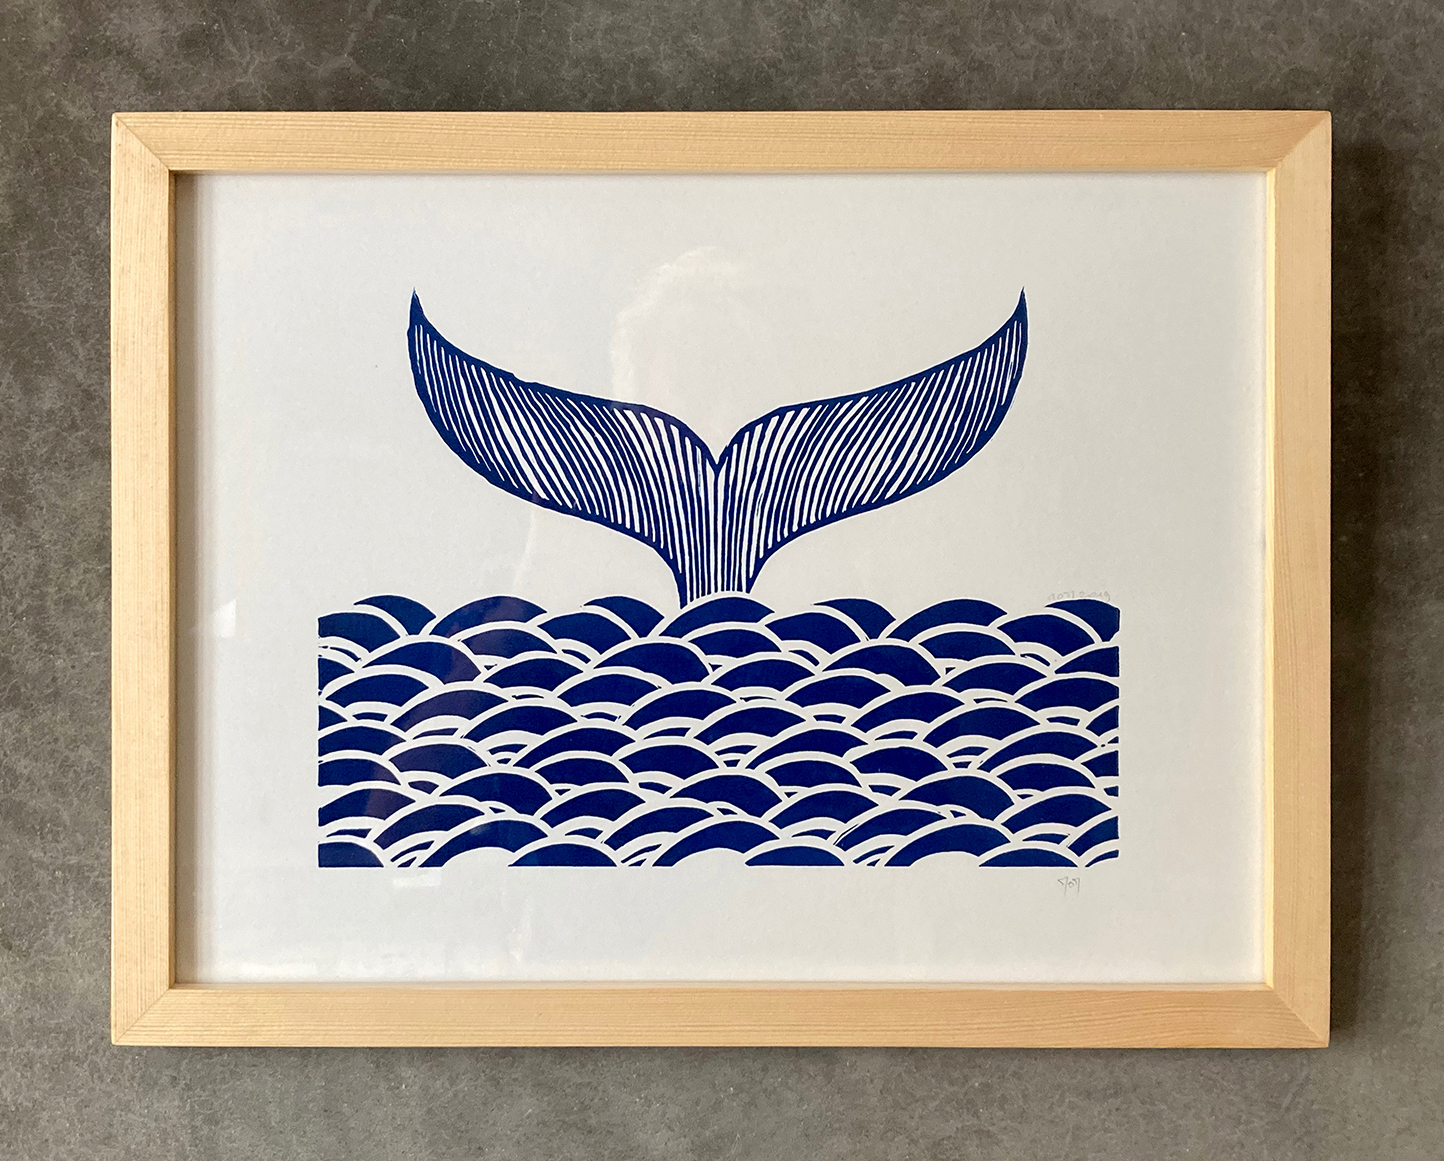 Linogravure. Queue de baleine. Format 40 x 30 cm.